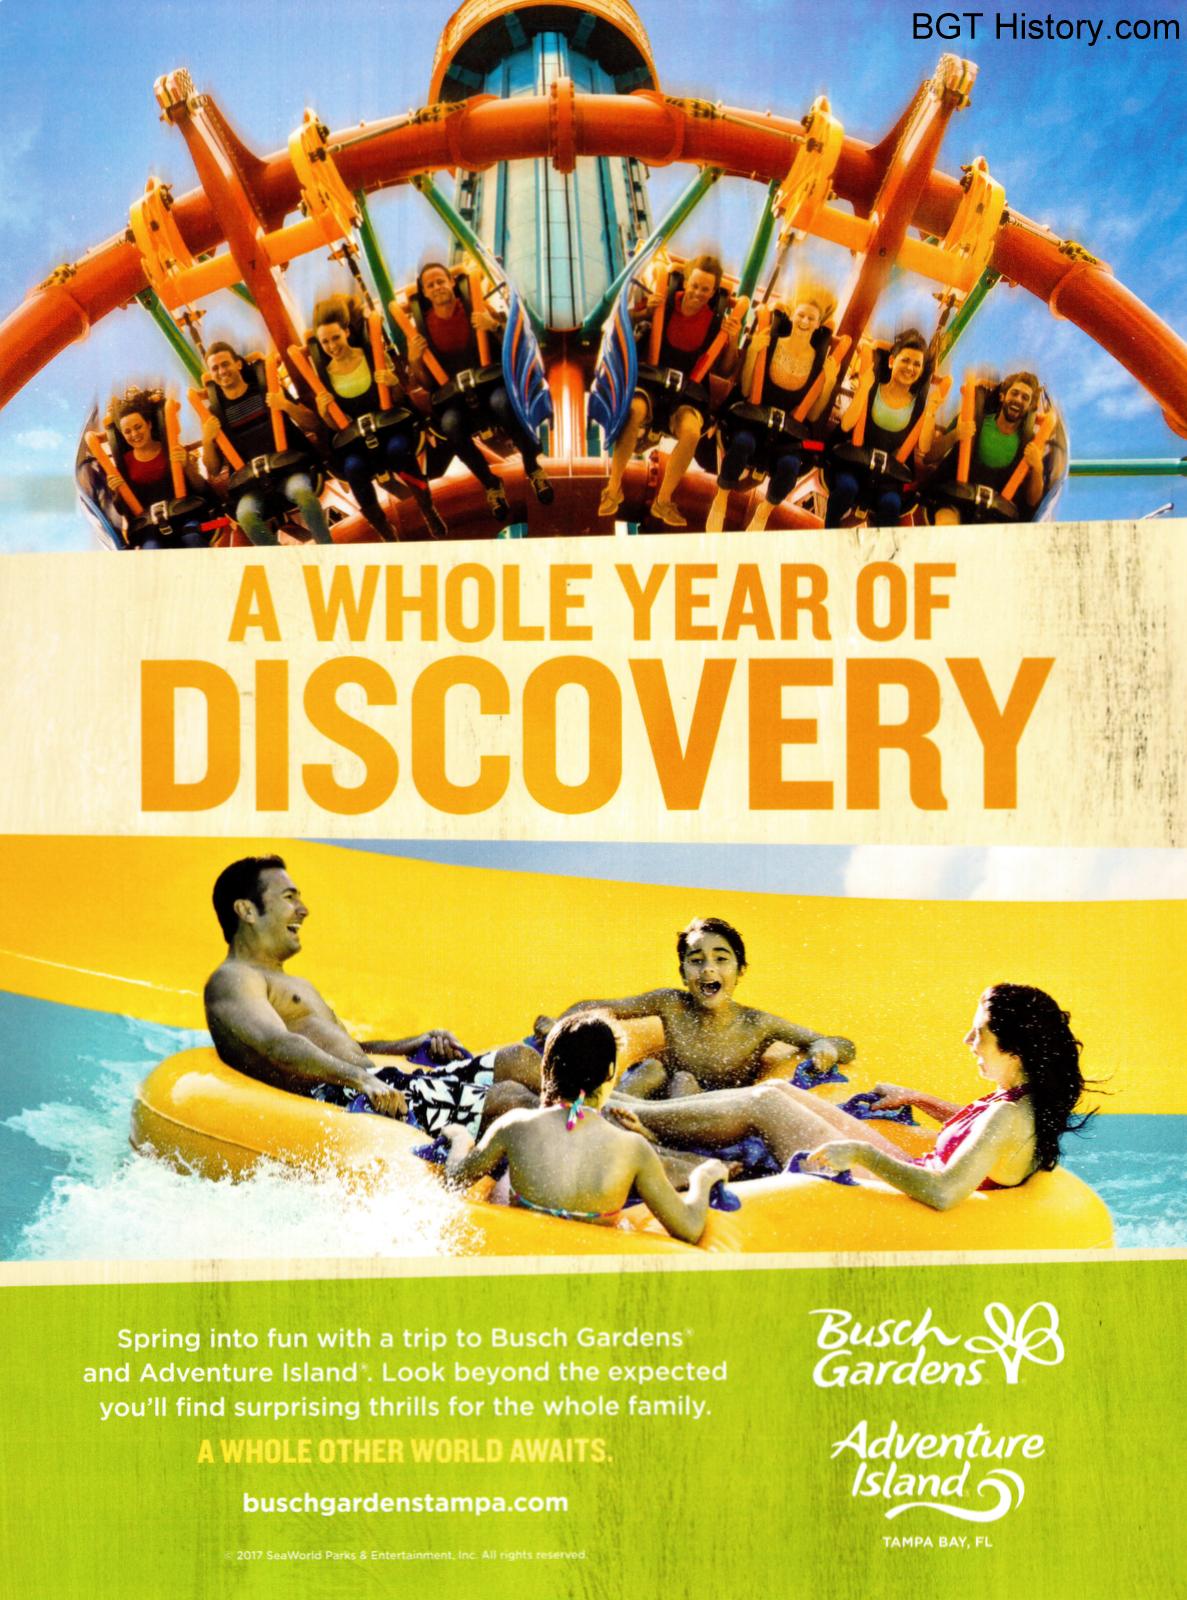 Advertisements Bgt History Busch Gardens Tampa History